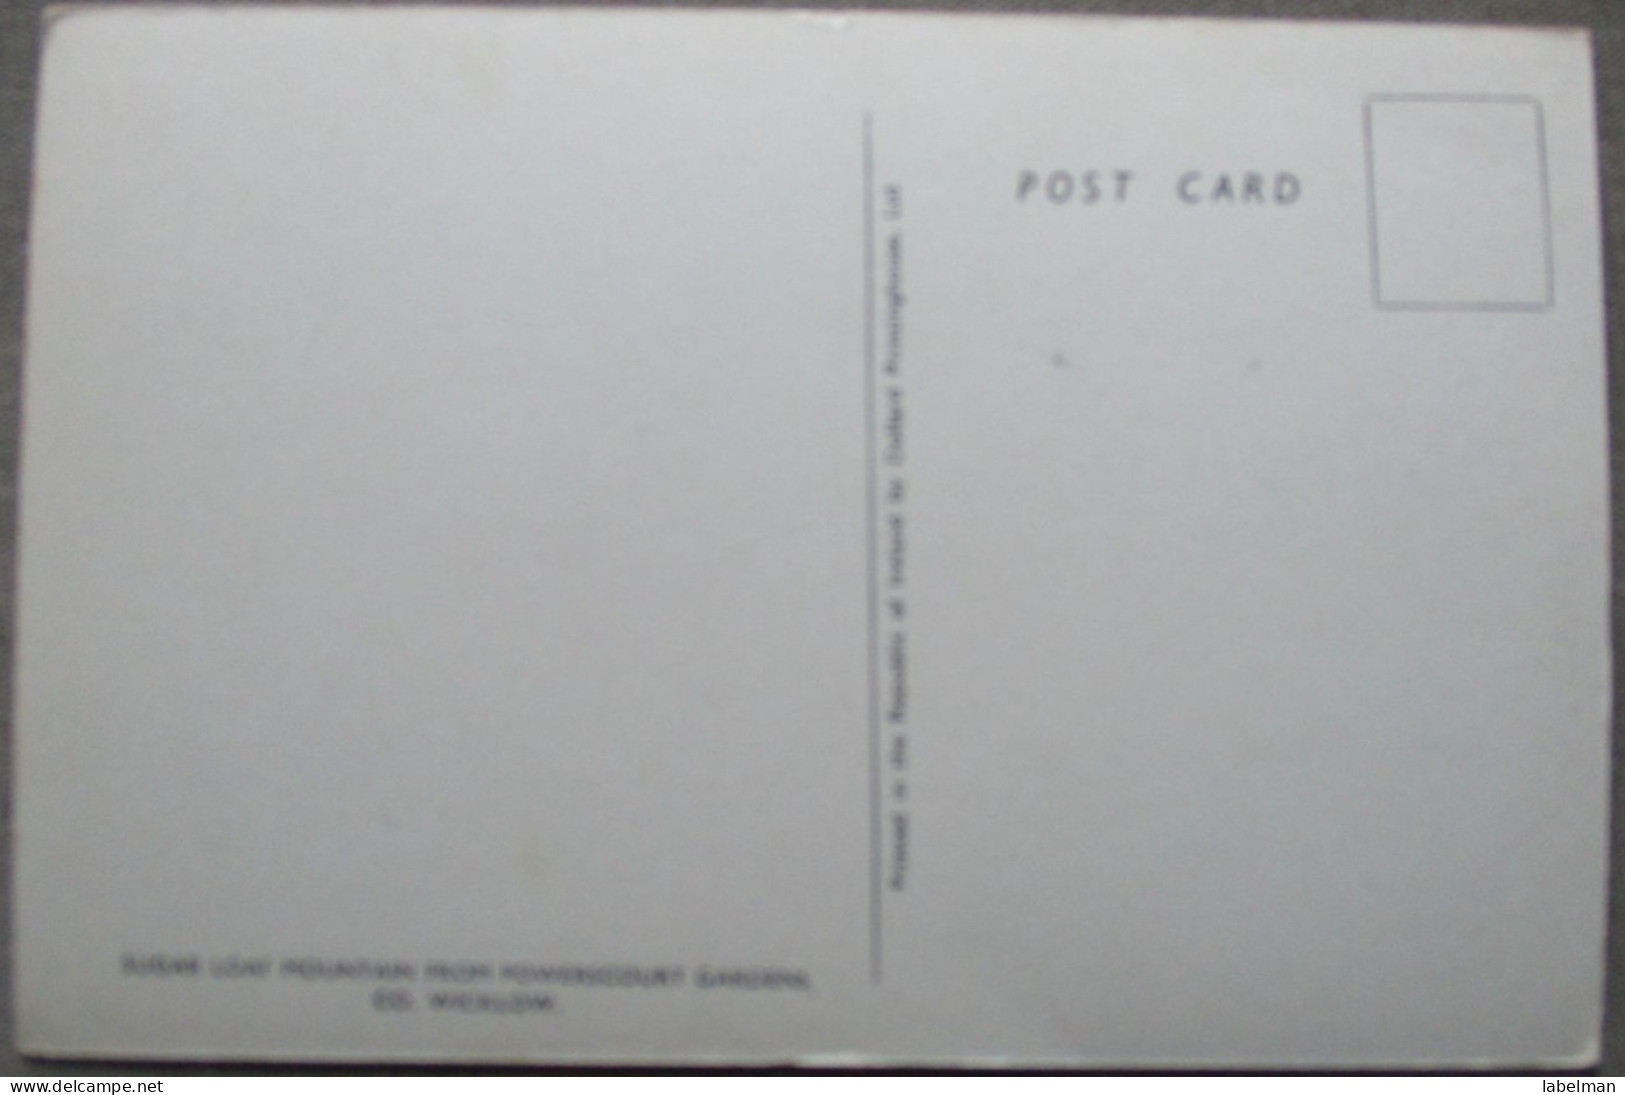 IRLAND UK UNITED KINGDOM WICKLOW SUGAR LOAF MT KARTE CARD POSTKARTE POSTCARD ANSICHTSKARTE CARTOLINA CARTE POSTALE - Collections & Lots